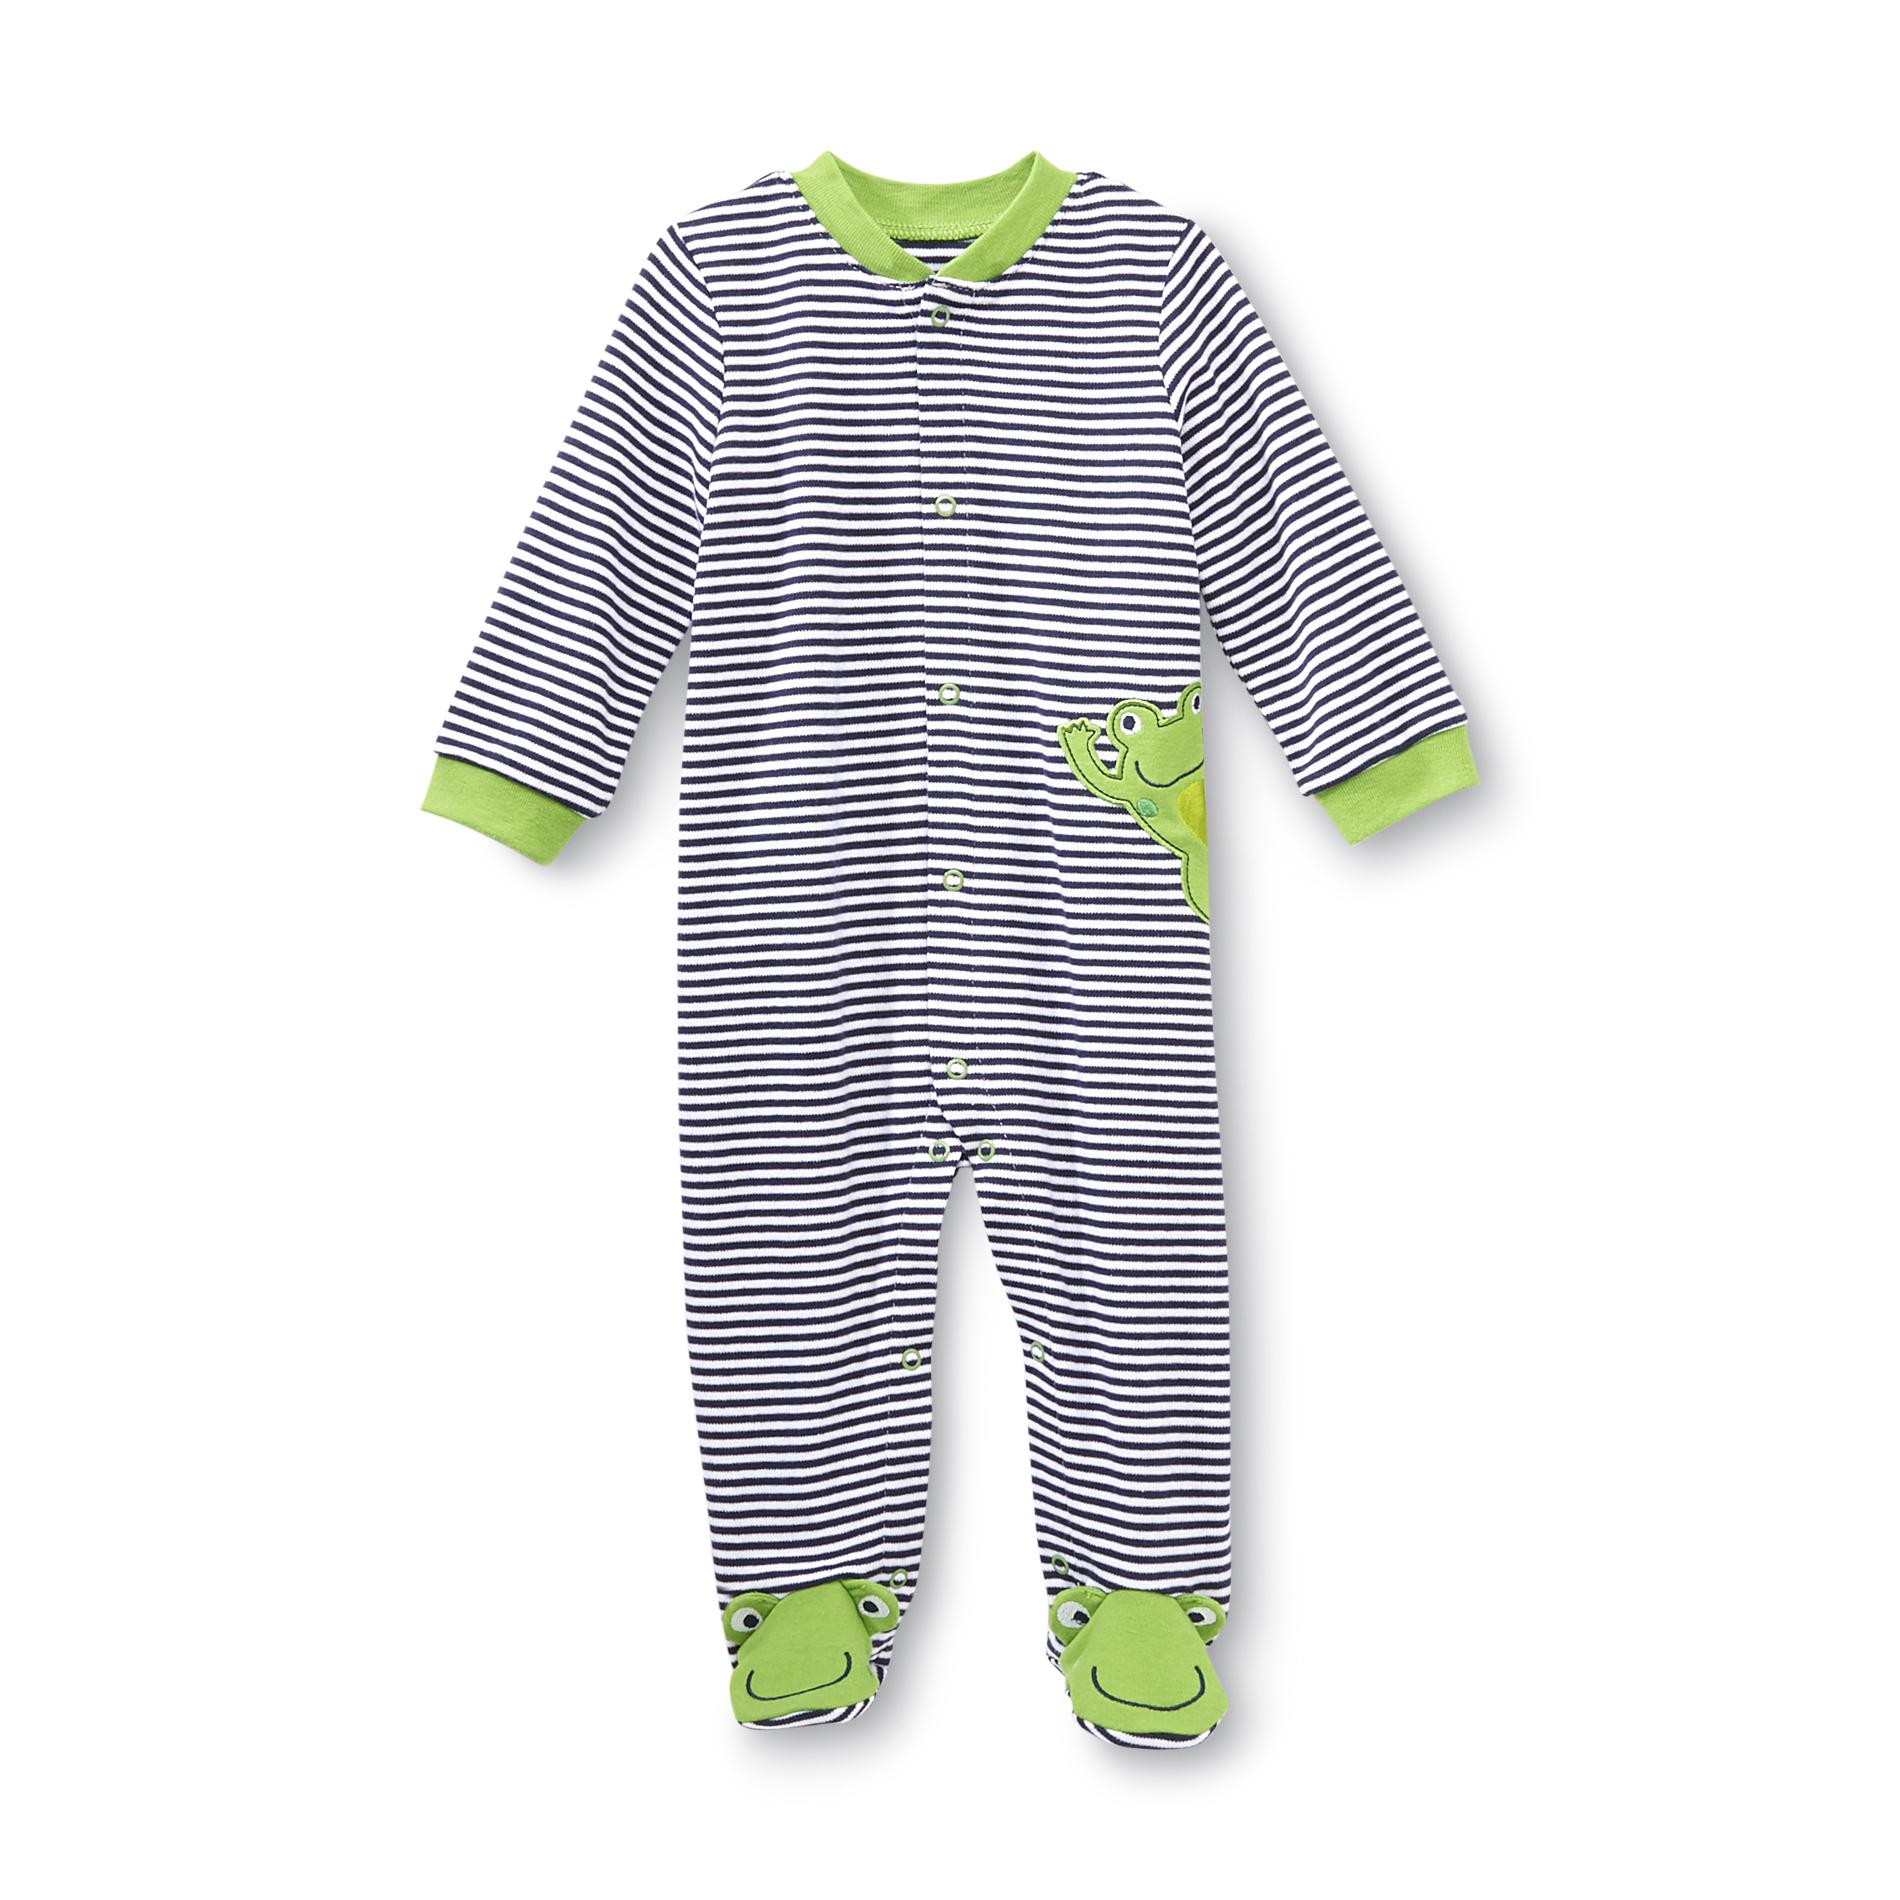 Small Wonders Newborn Boy's Sleeper Pajamas - Frog